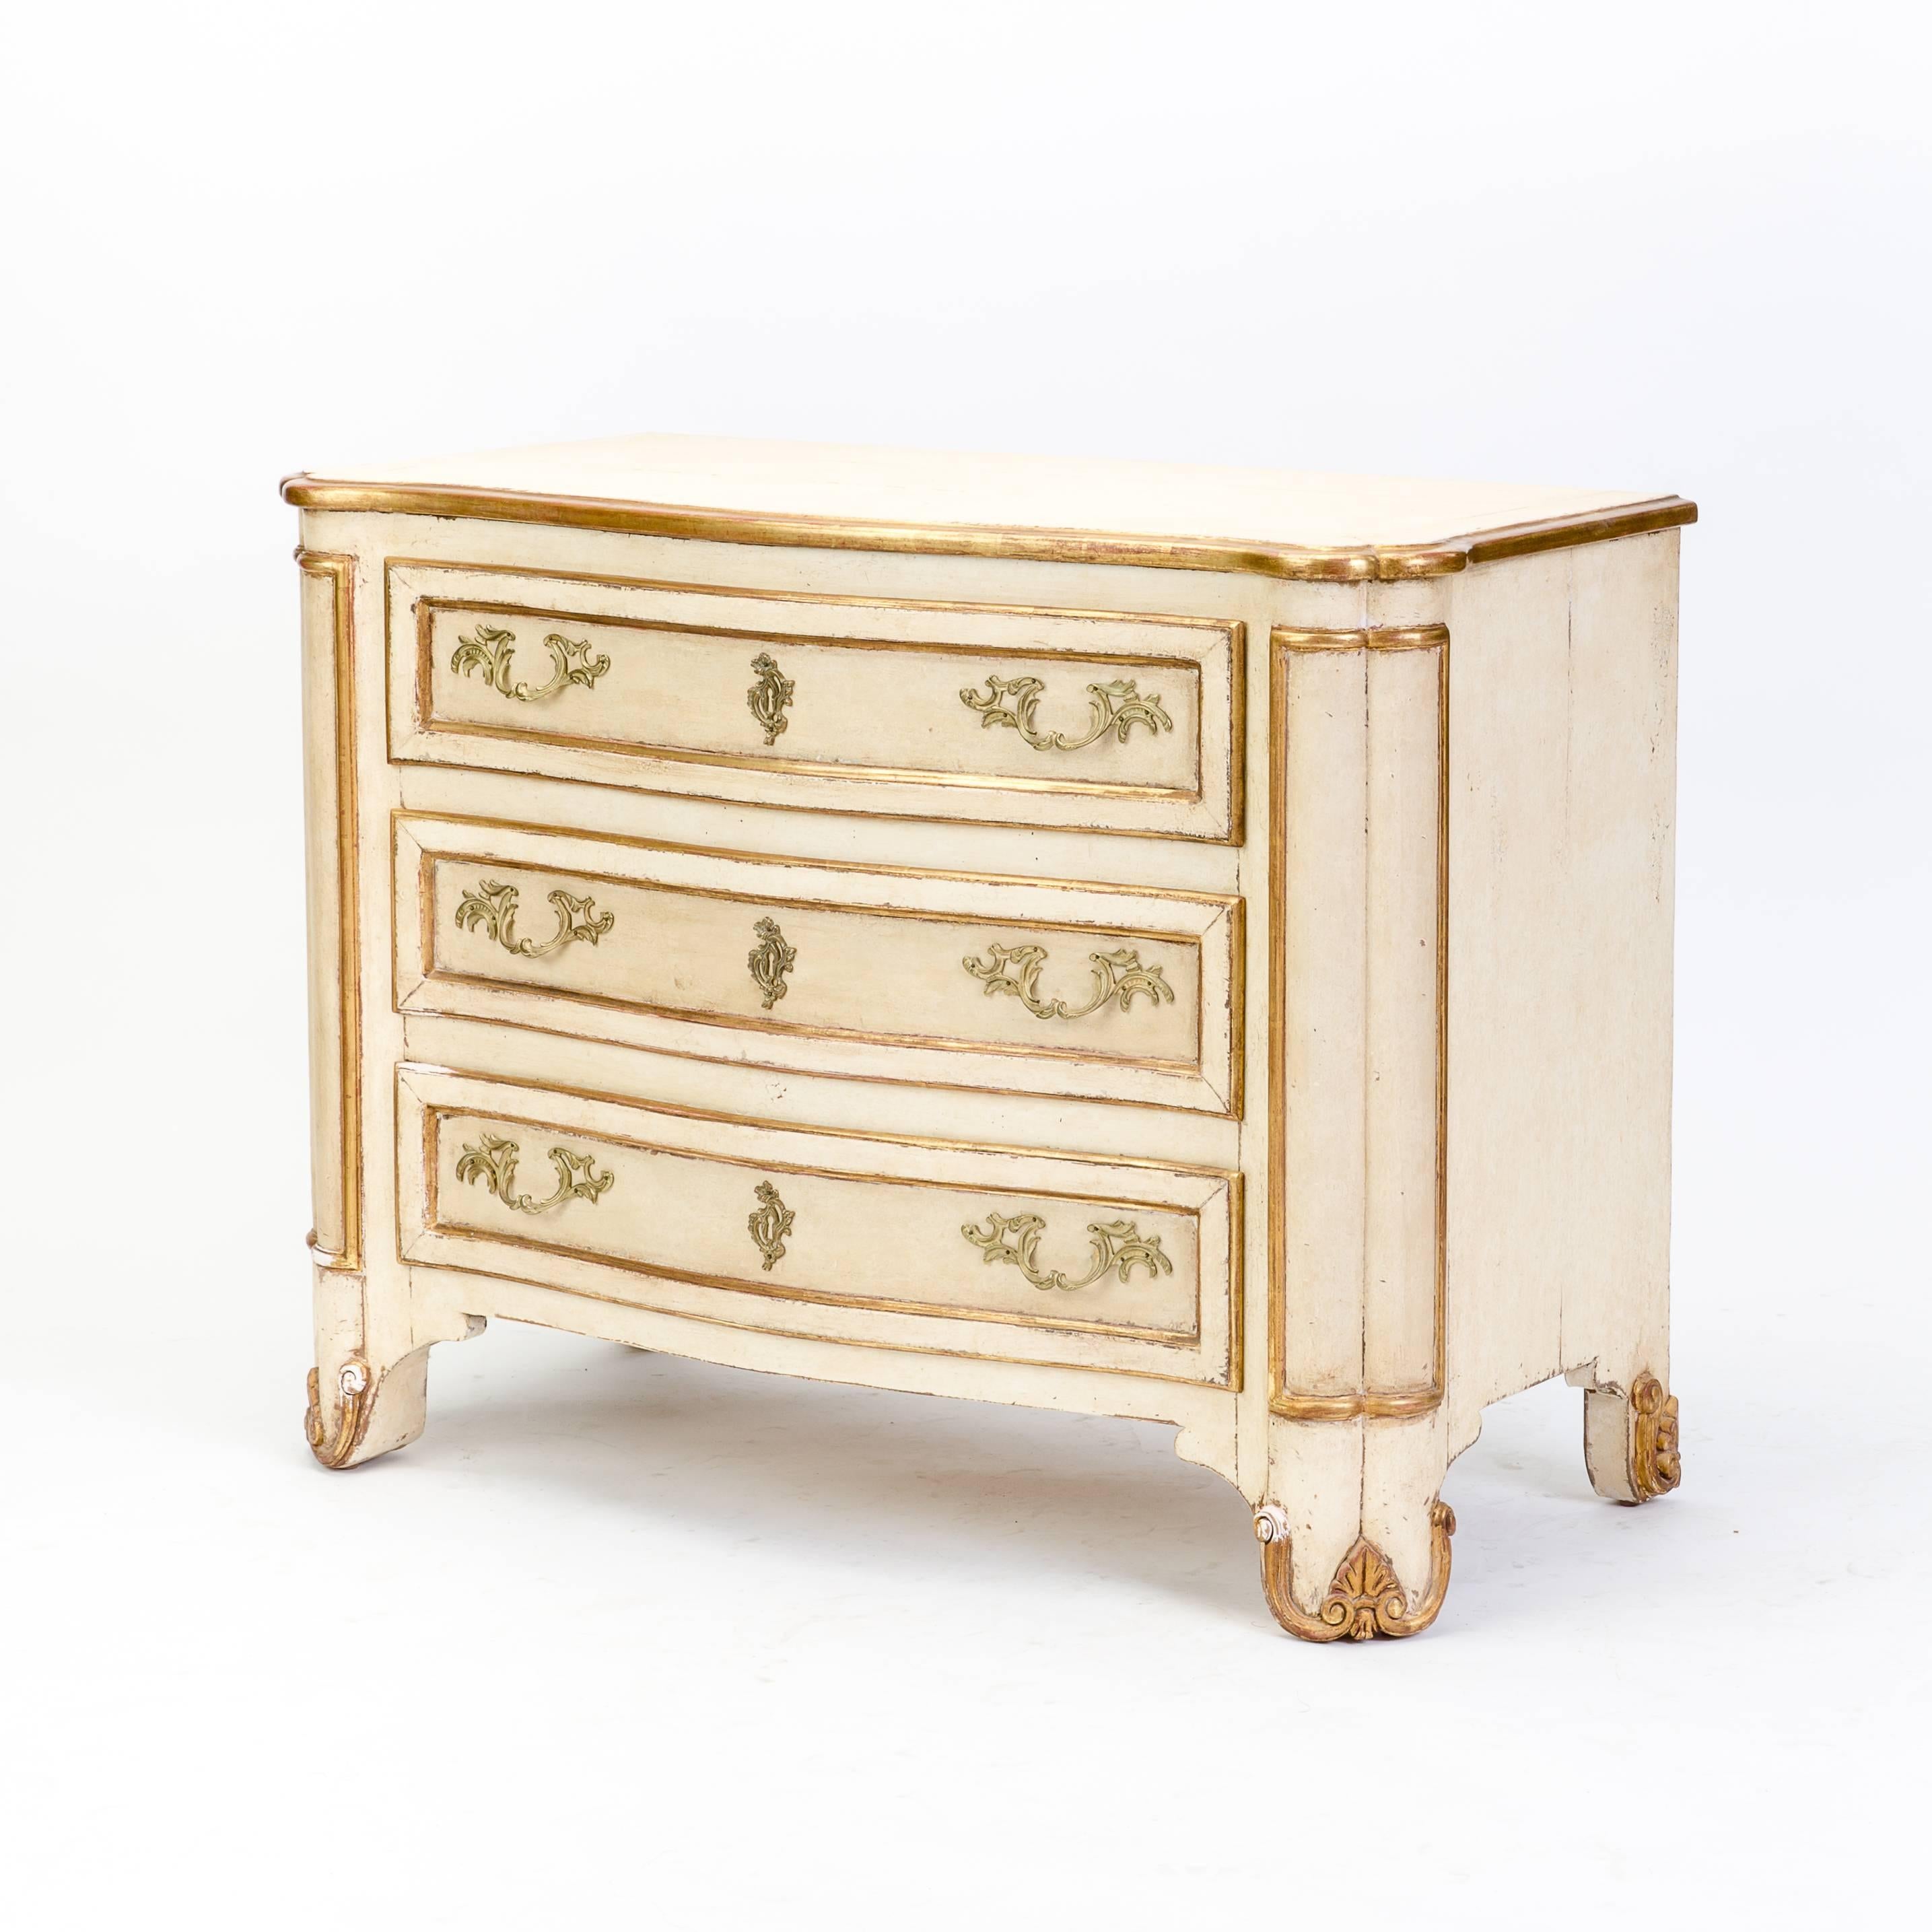 Beautiful walnut Avignon chest of drawers with 22-karat gold leaf trim by Dessin Fournir.

Width: 46"
Depth: 22"
Height: 34".